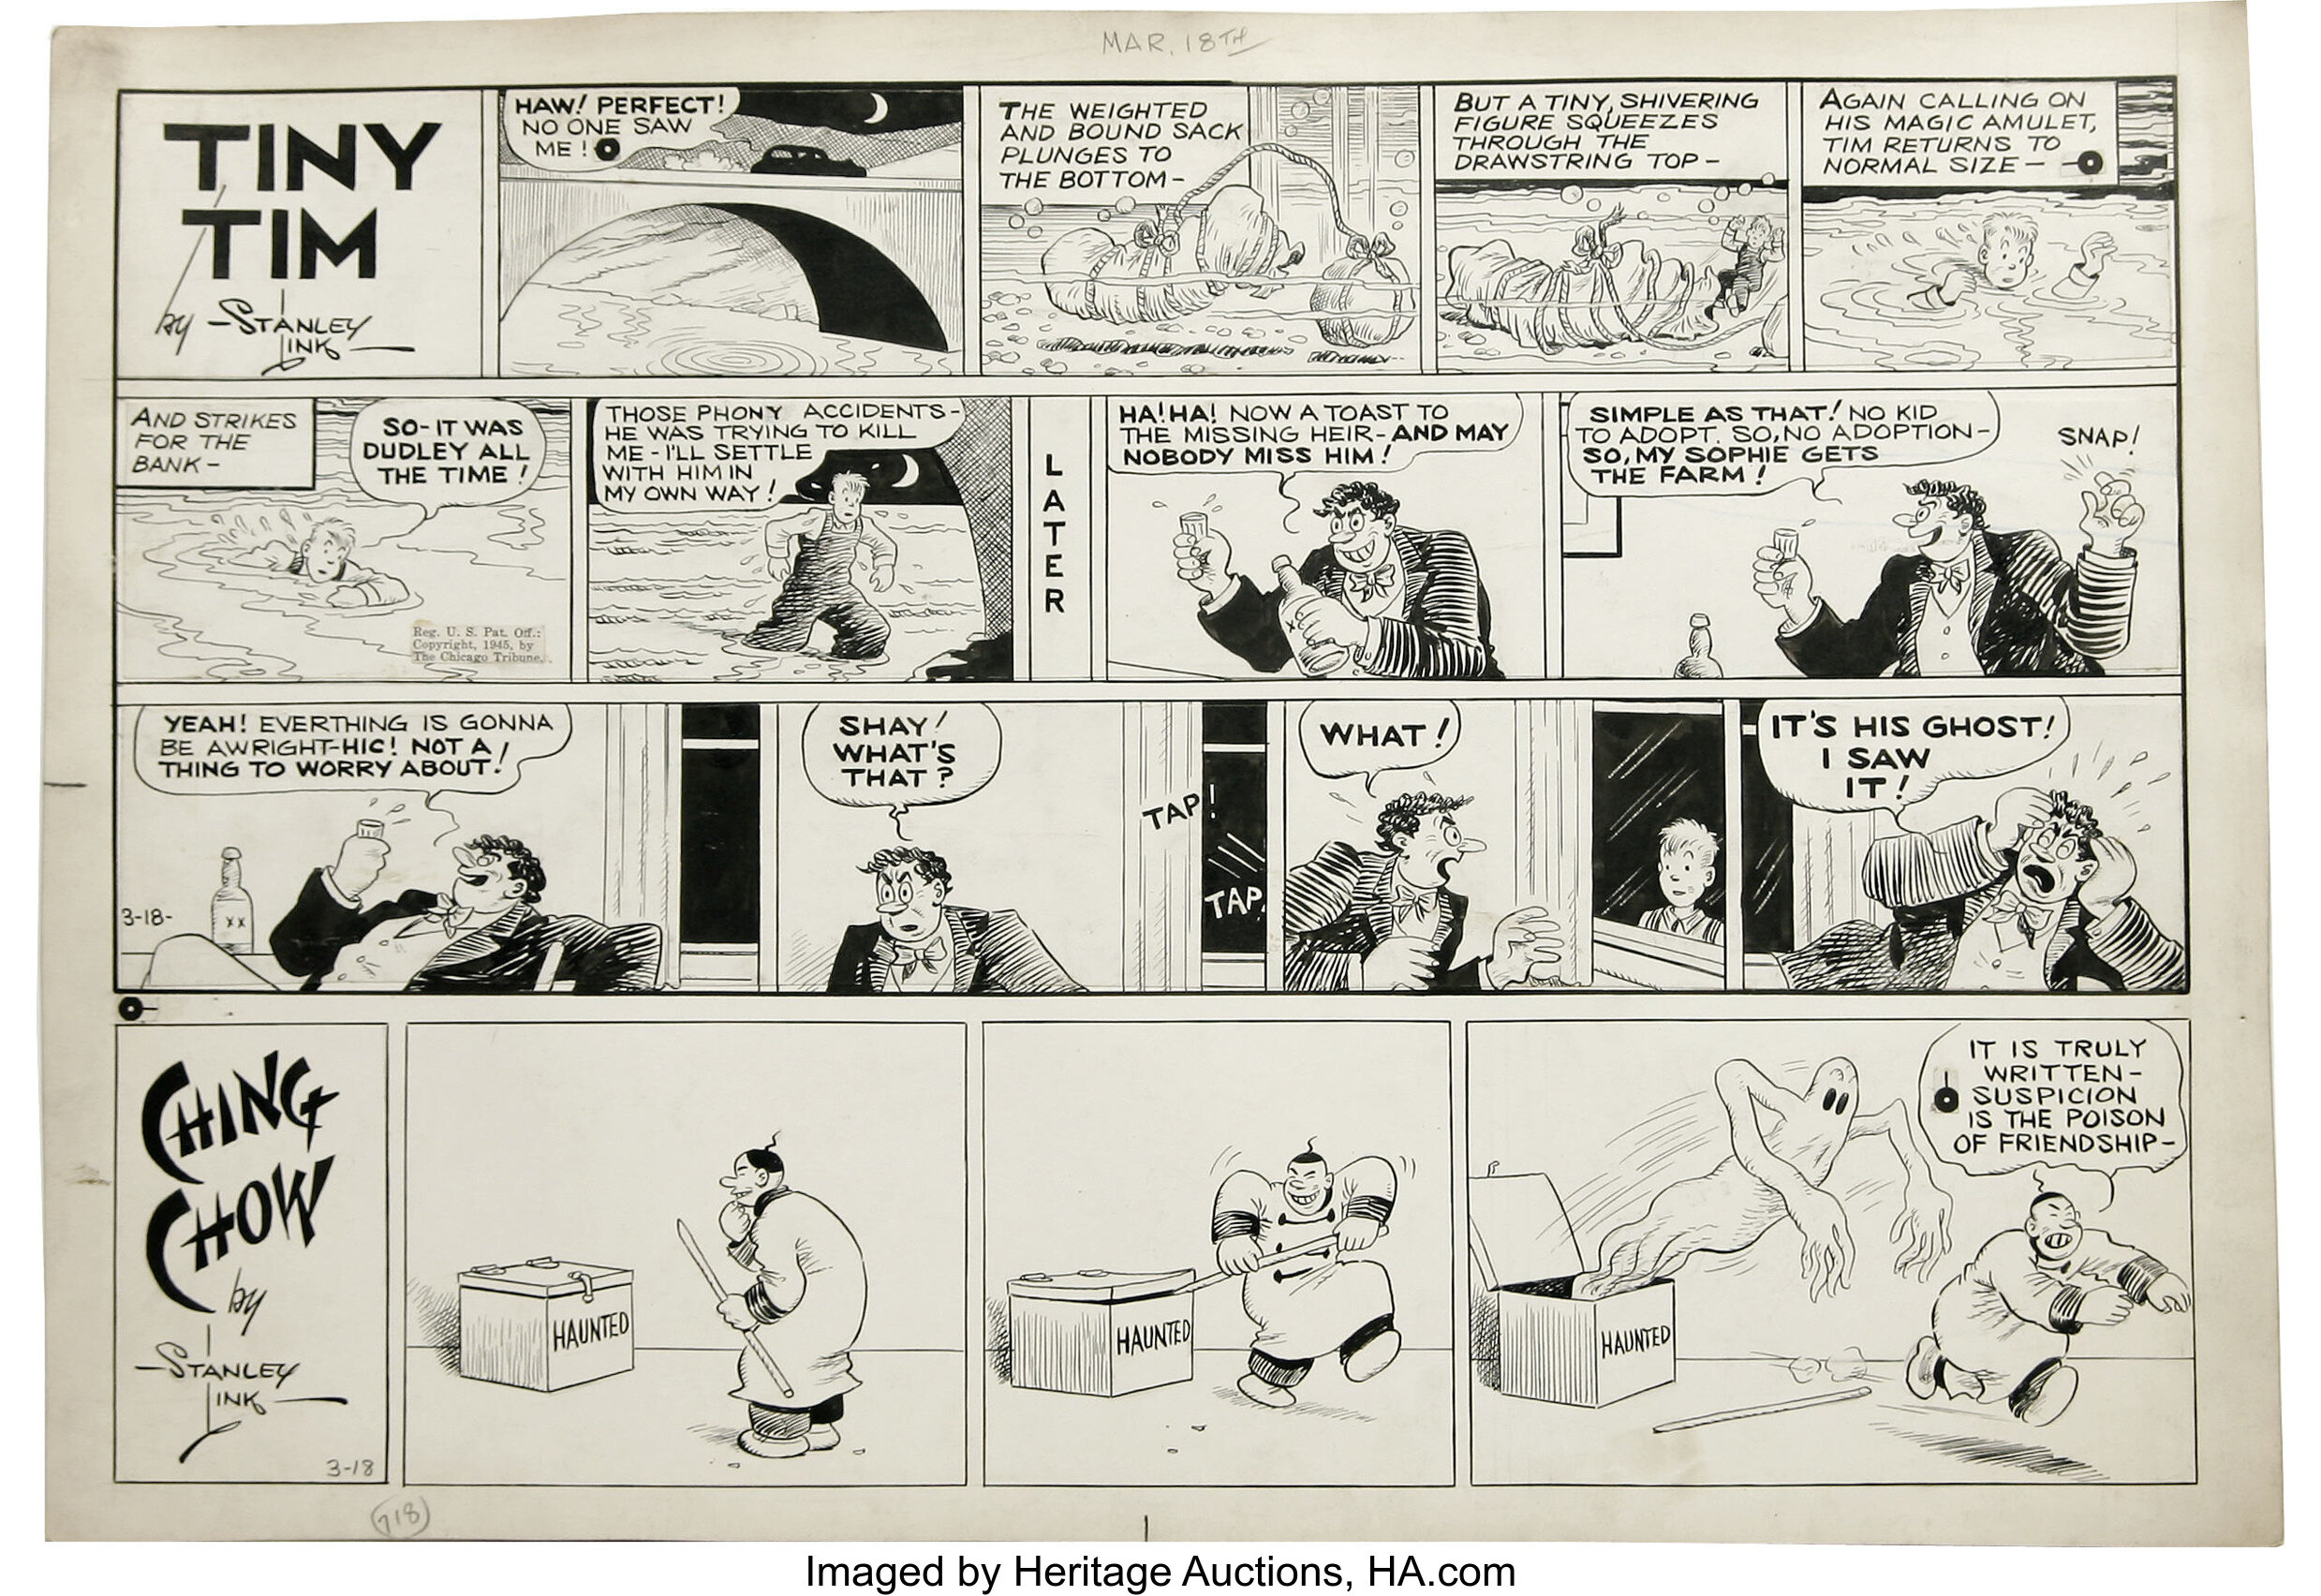 Stanley Link - Tiny Tim Sunday Comic Strip Original Art, Group of